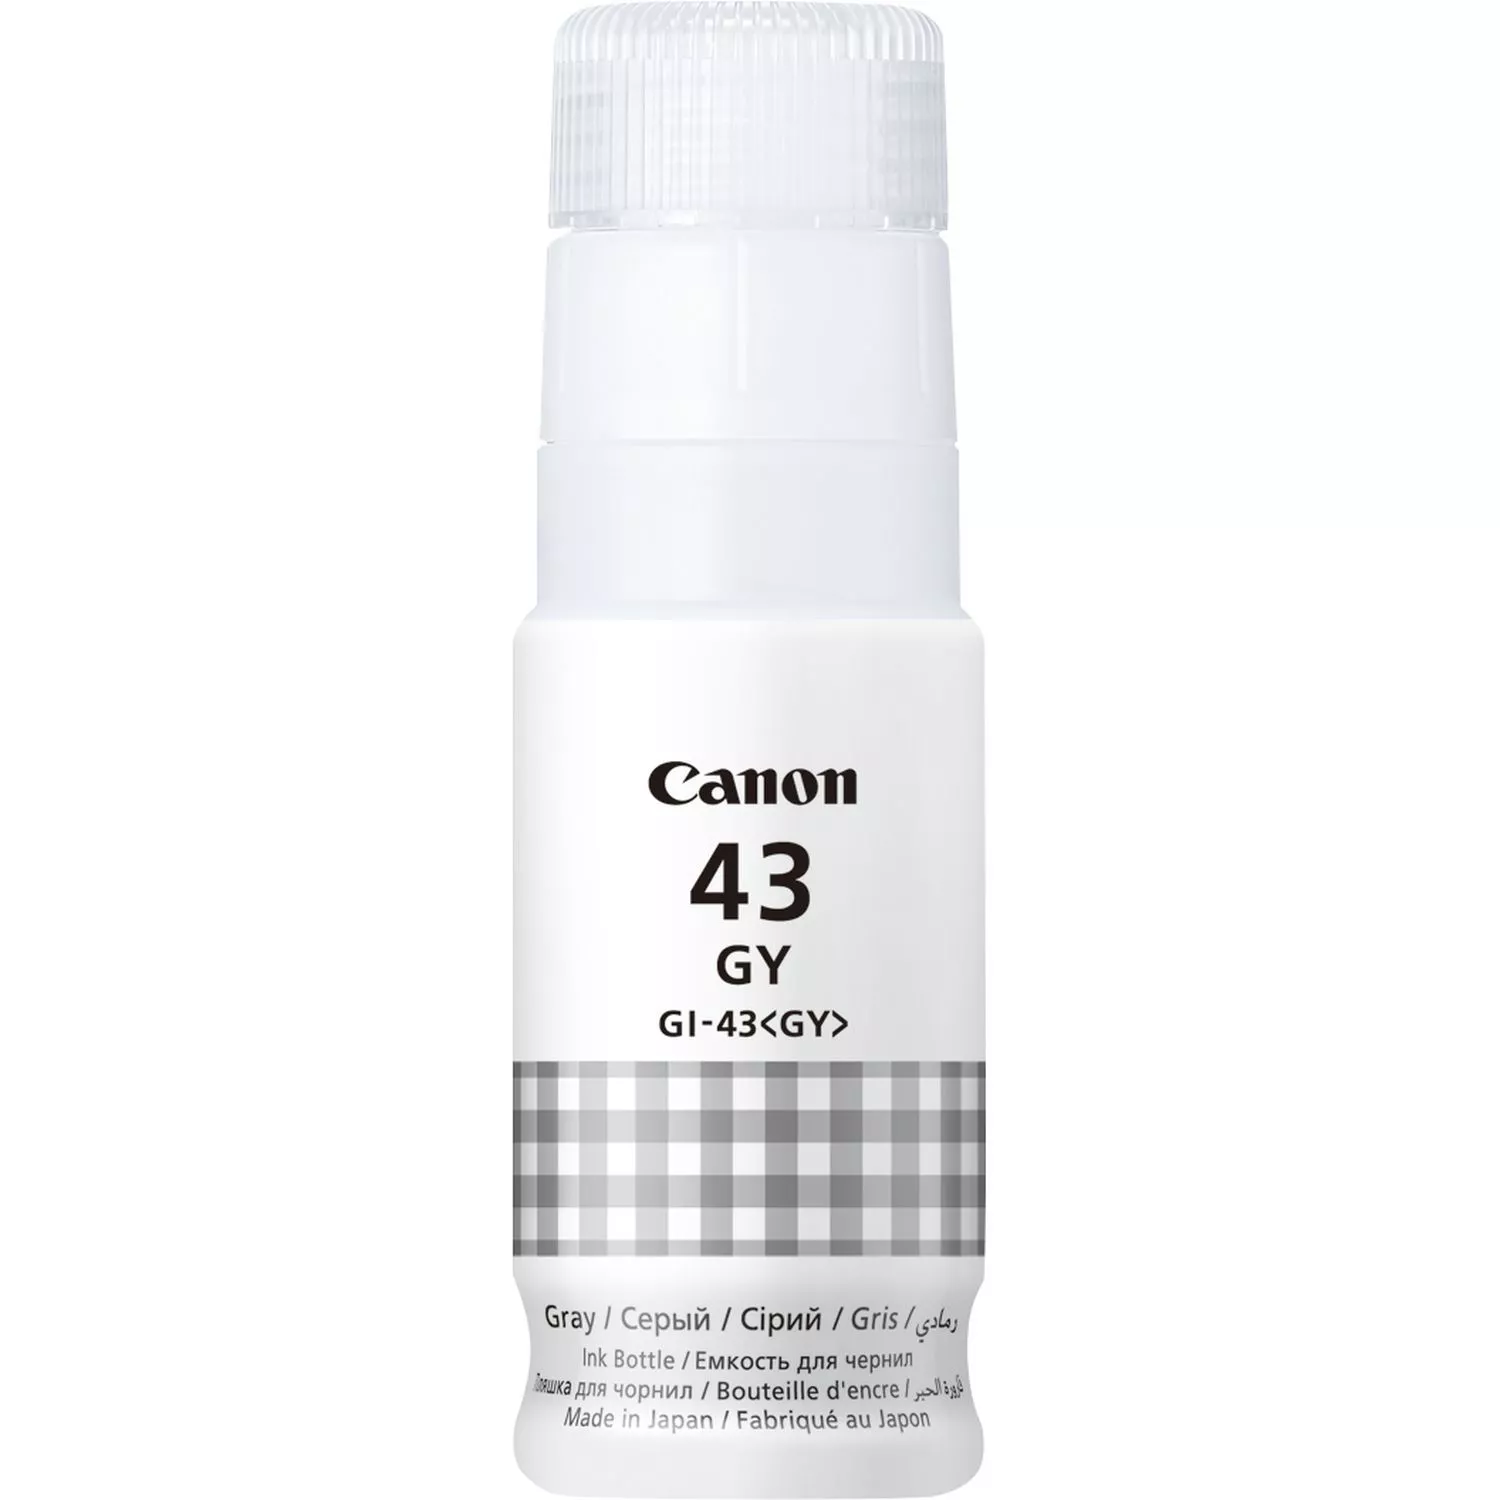 Achat CANON GI-43 GY EMB Grey Ink Bottle au meilleur prix